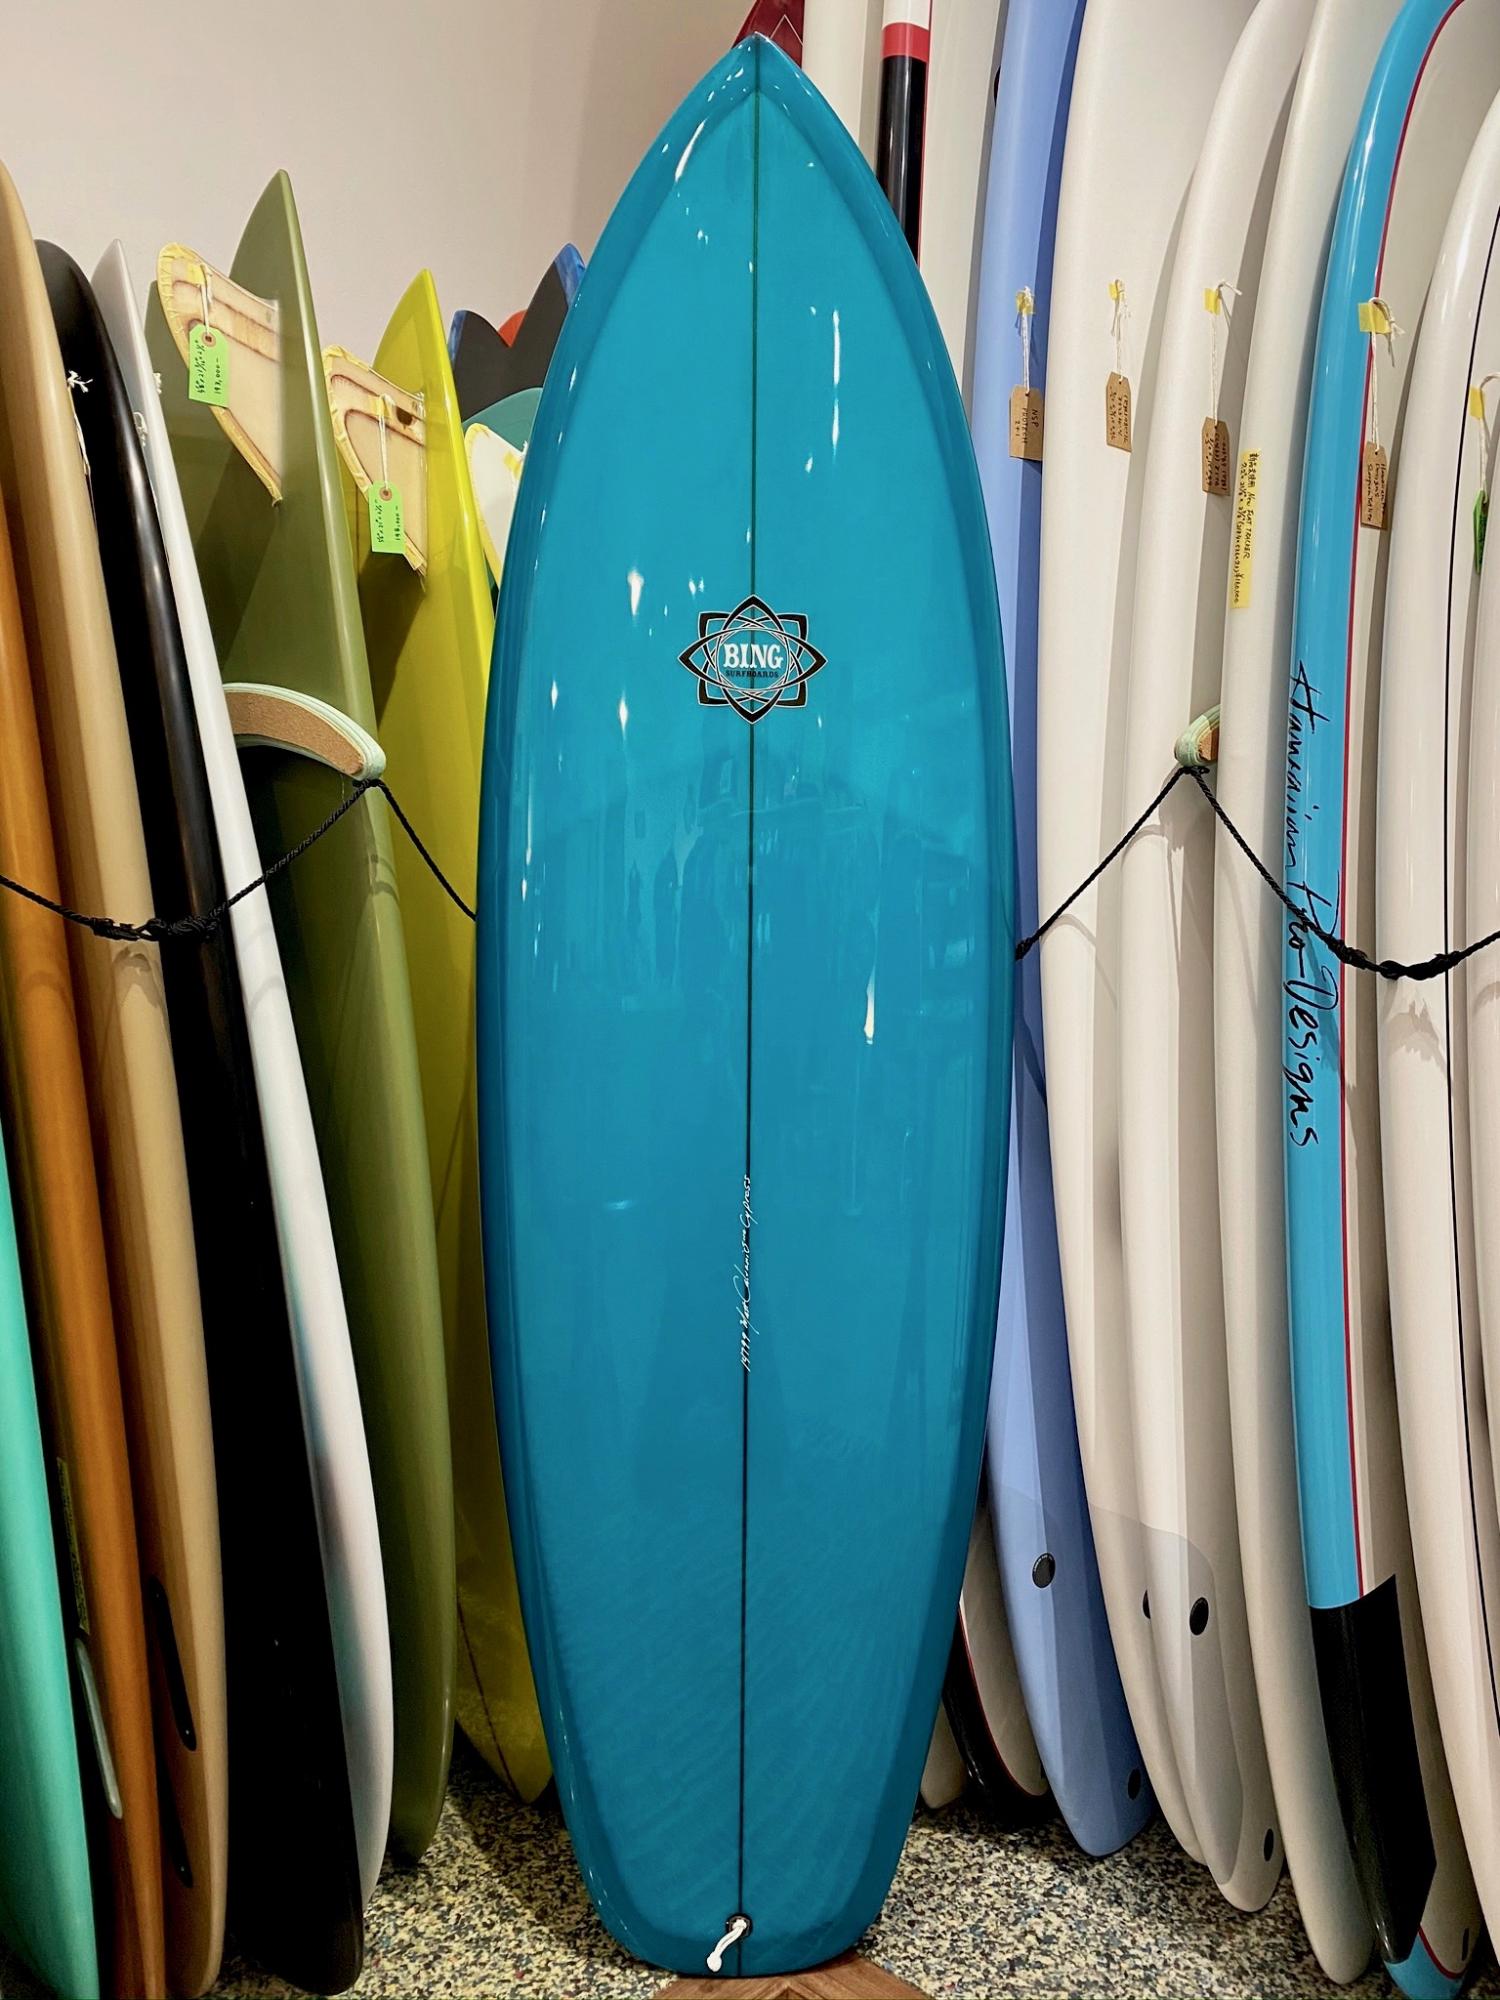 BING SURFBOARDS|Okinawa surf shop YES SURF